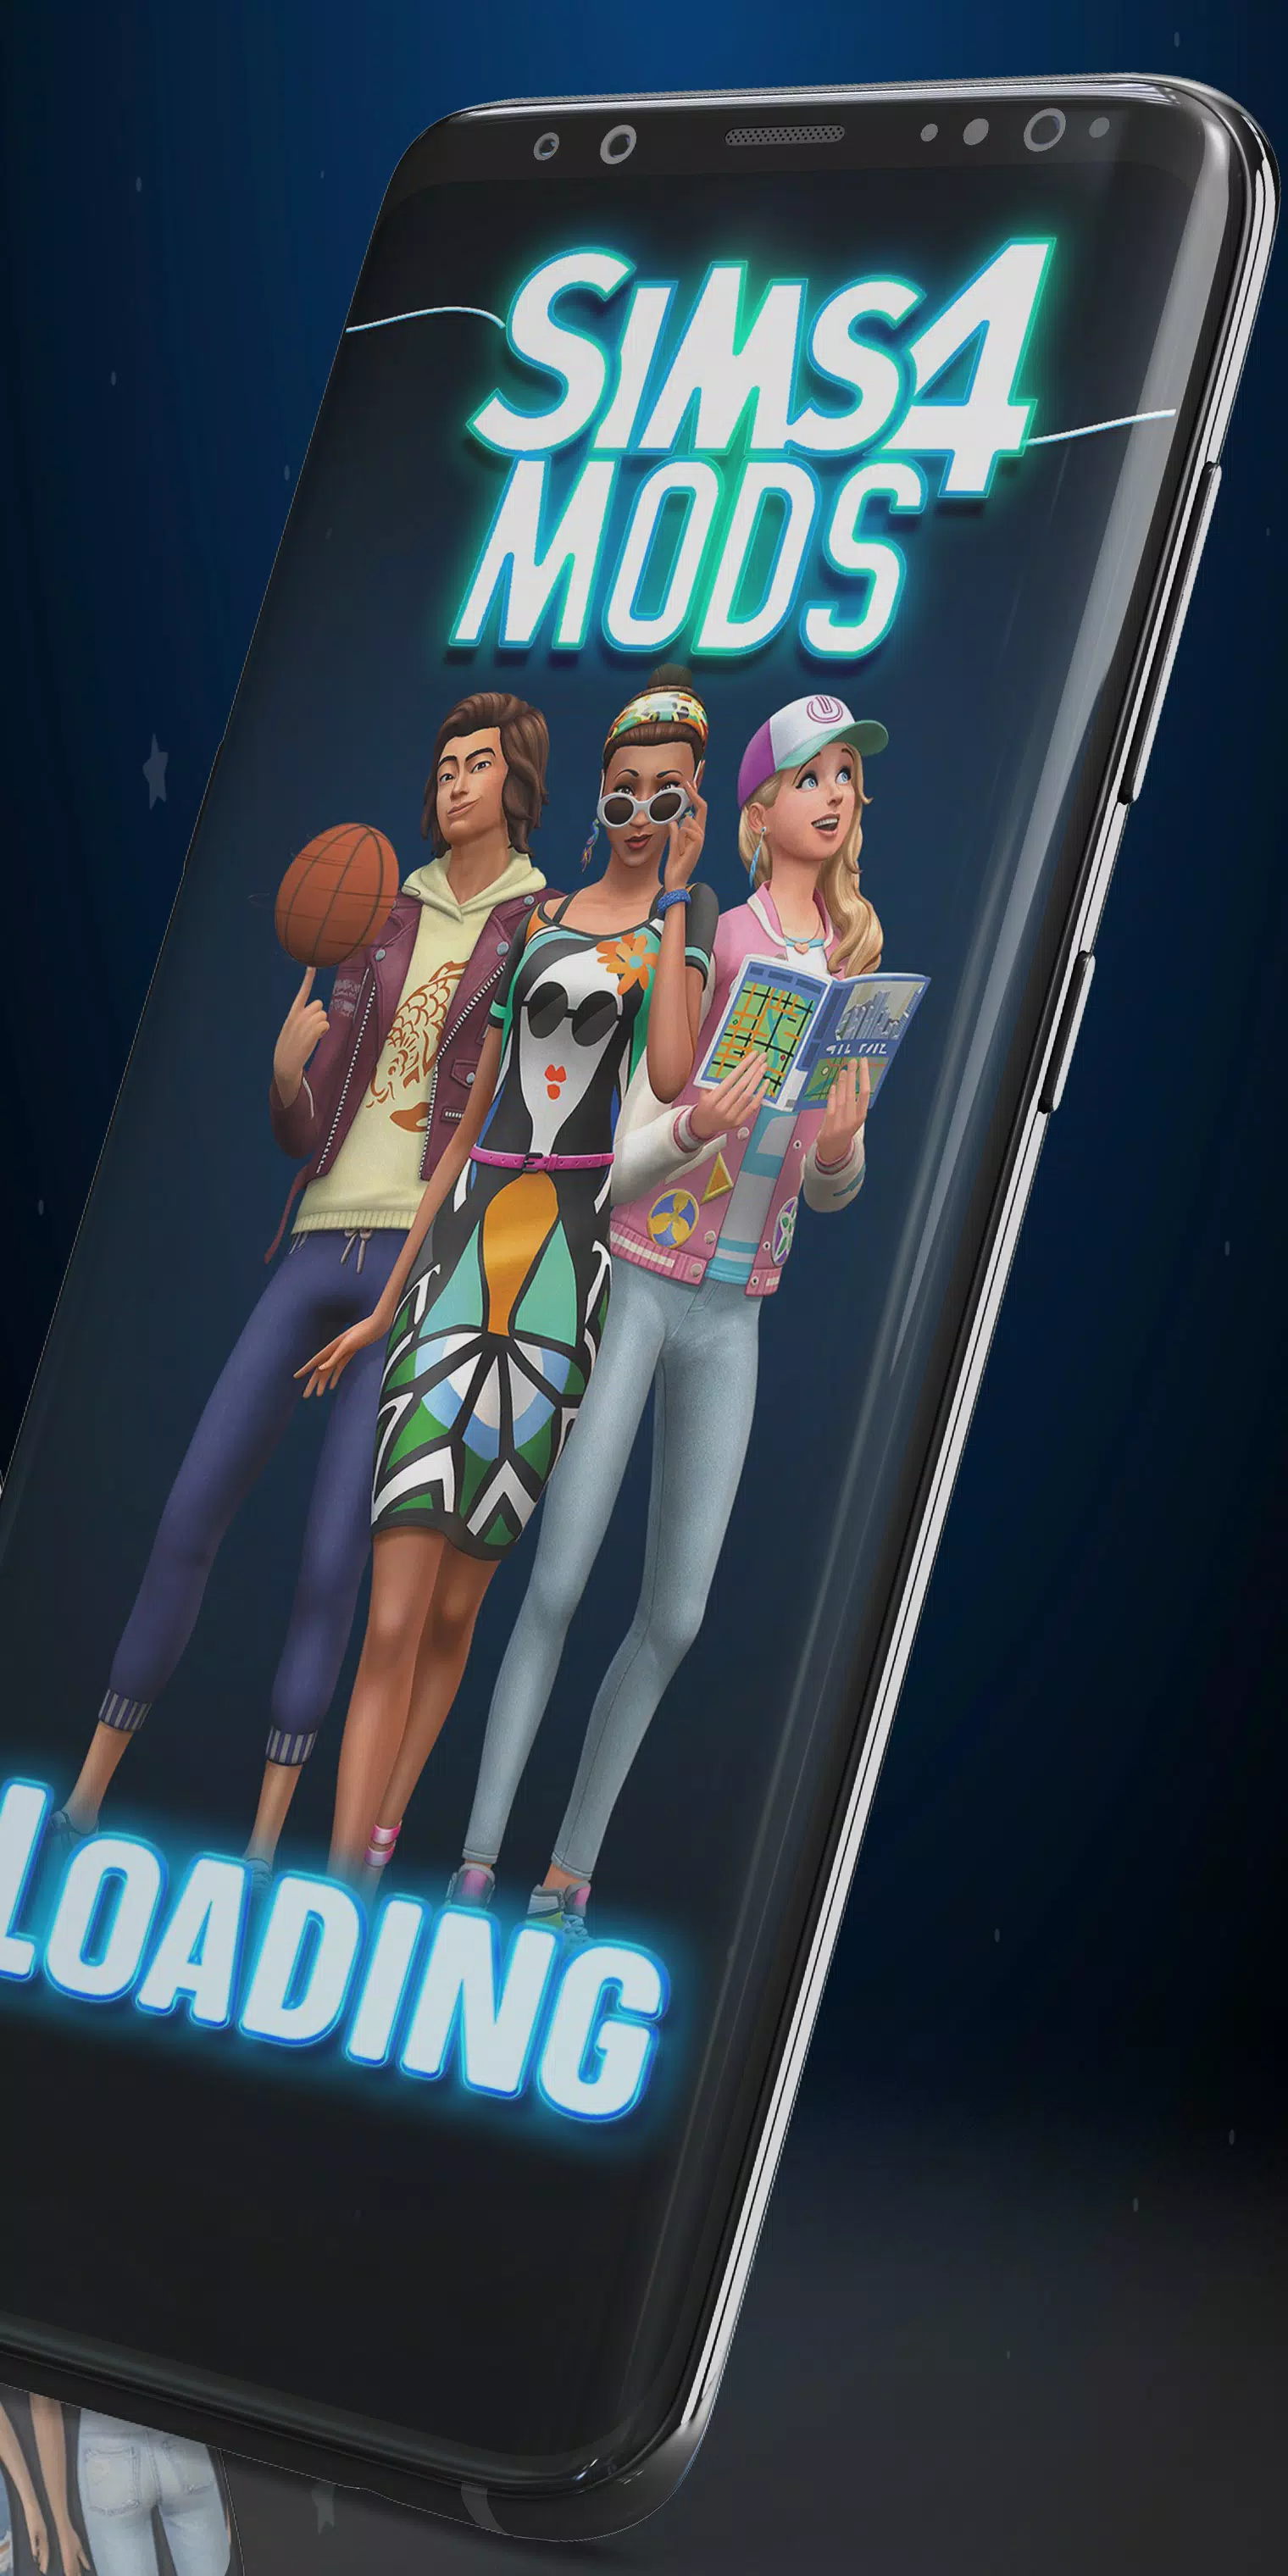 EA lança novo The Sims 4 Mobile para celular Android - Tribo Gamer